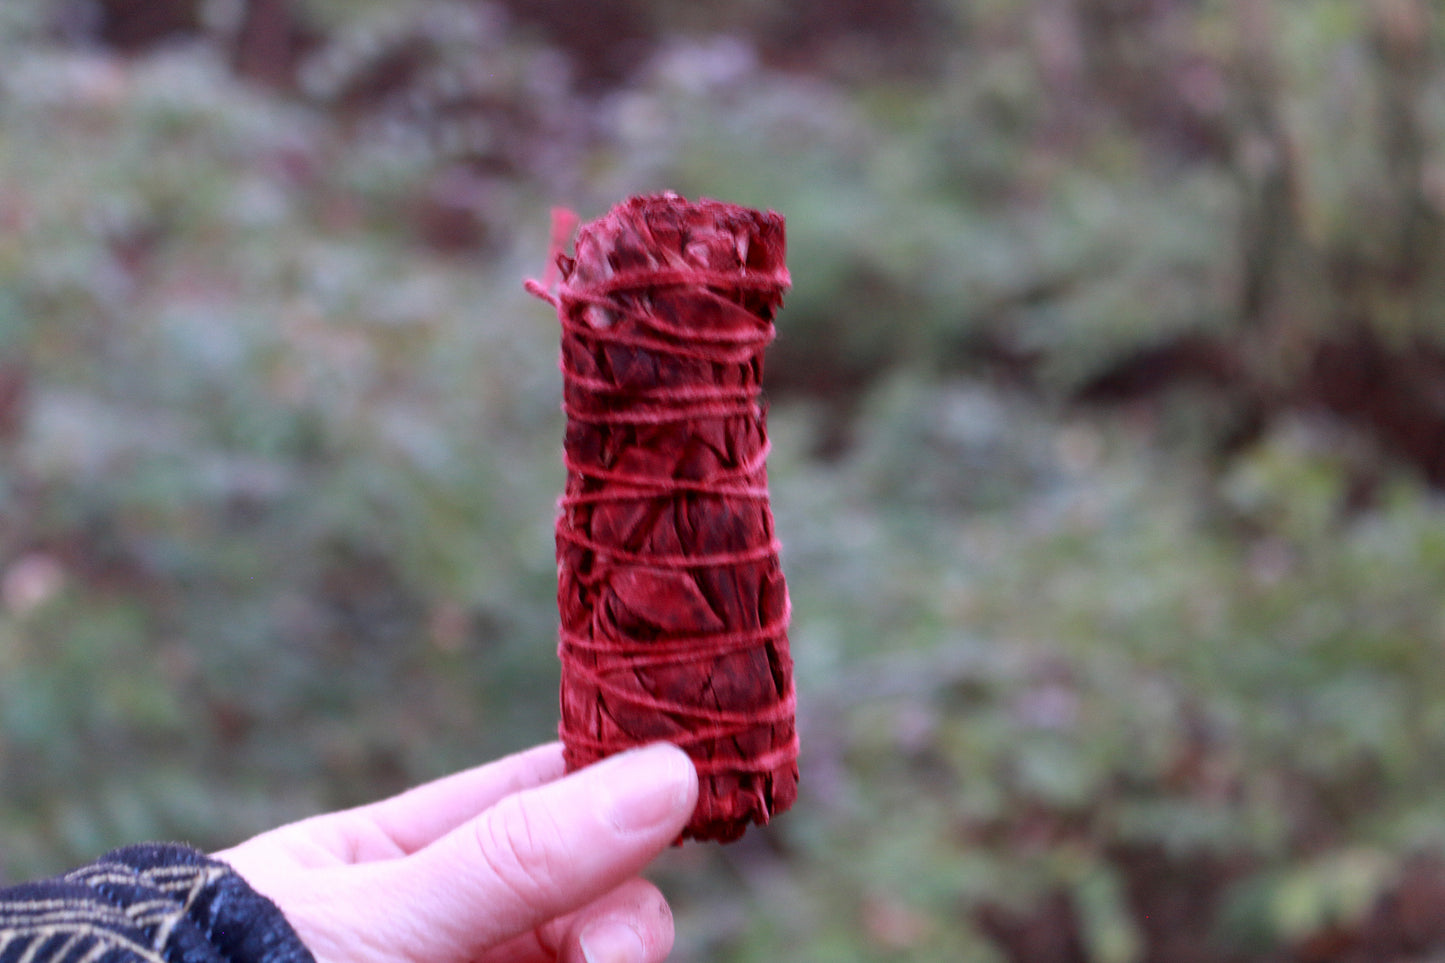 Dragon's Blood Sage Smudge Sticks